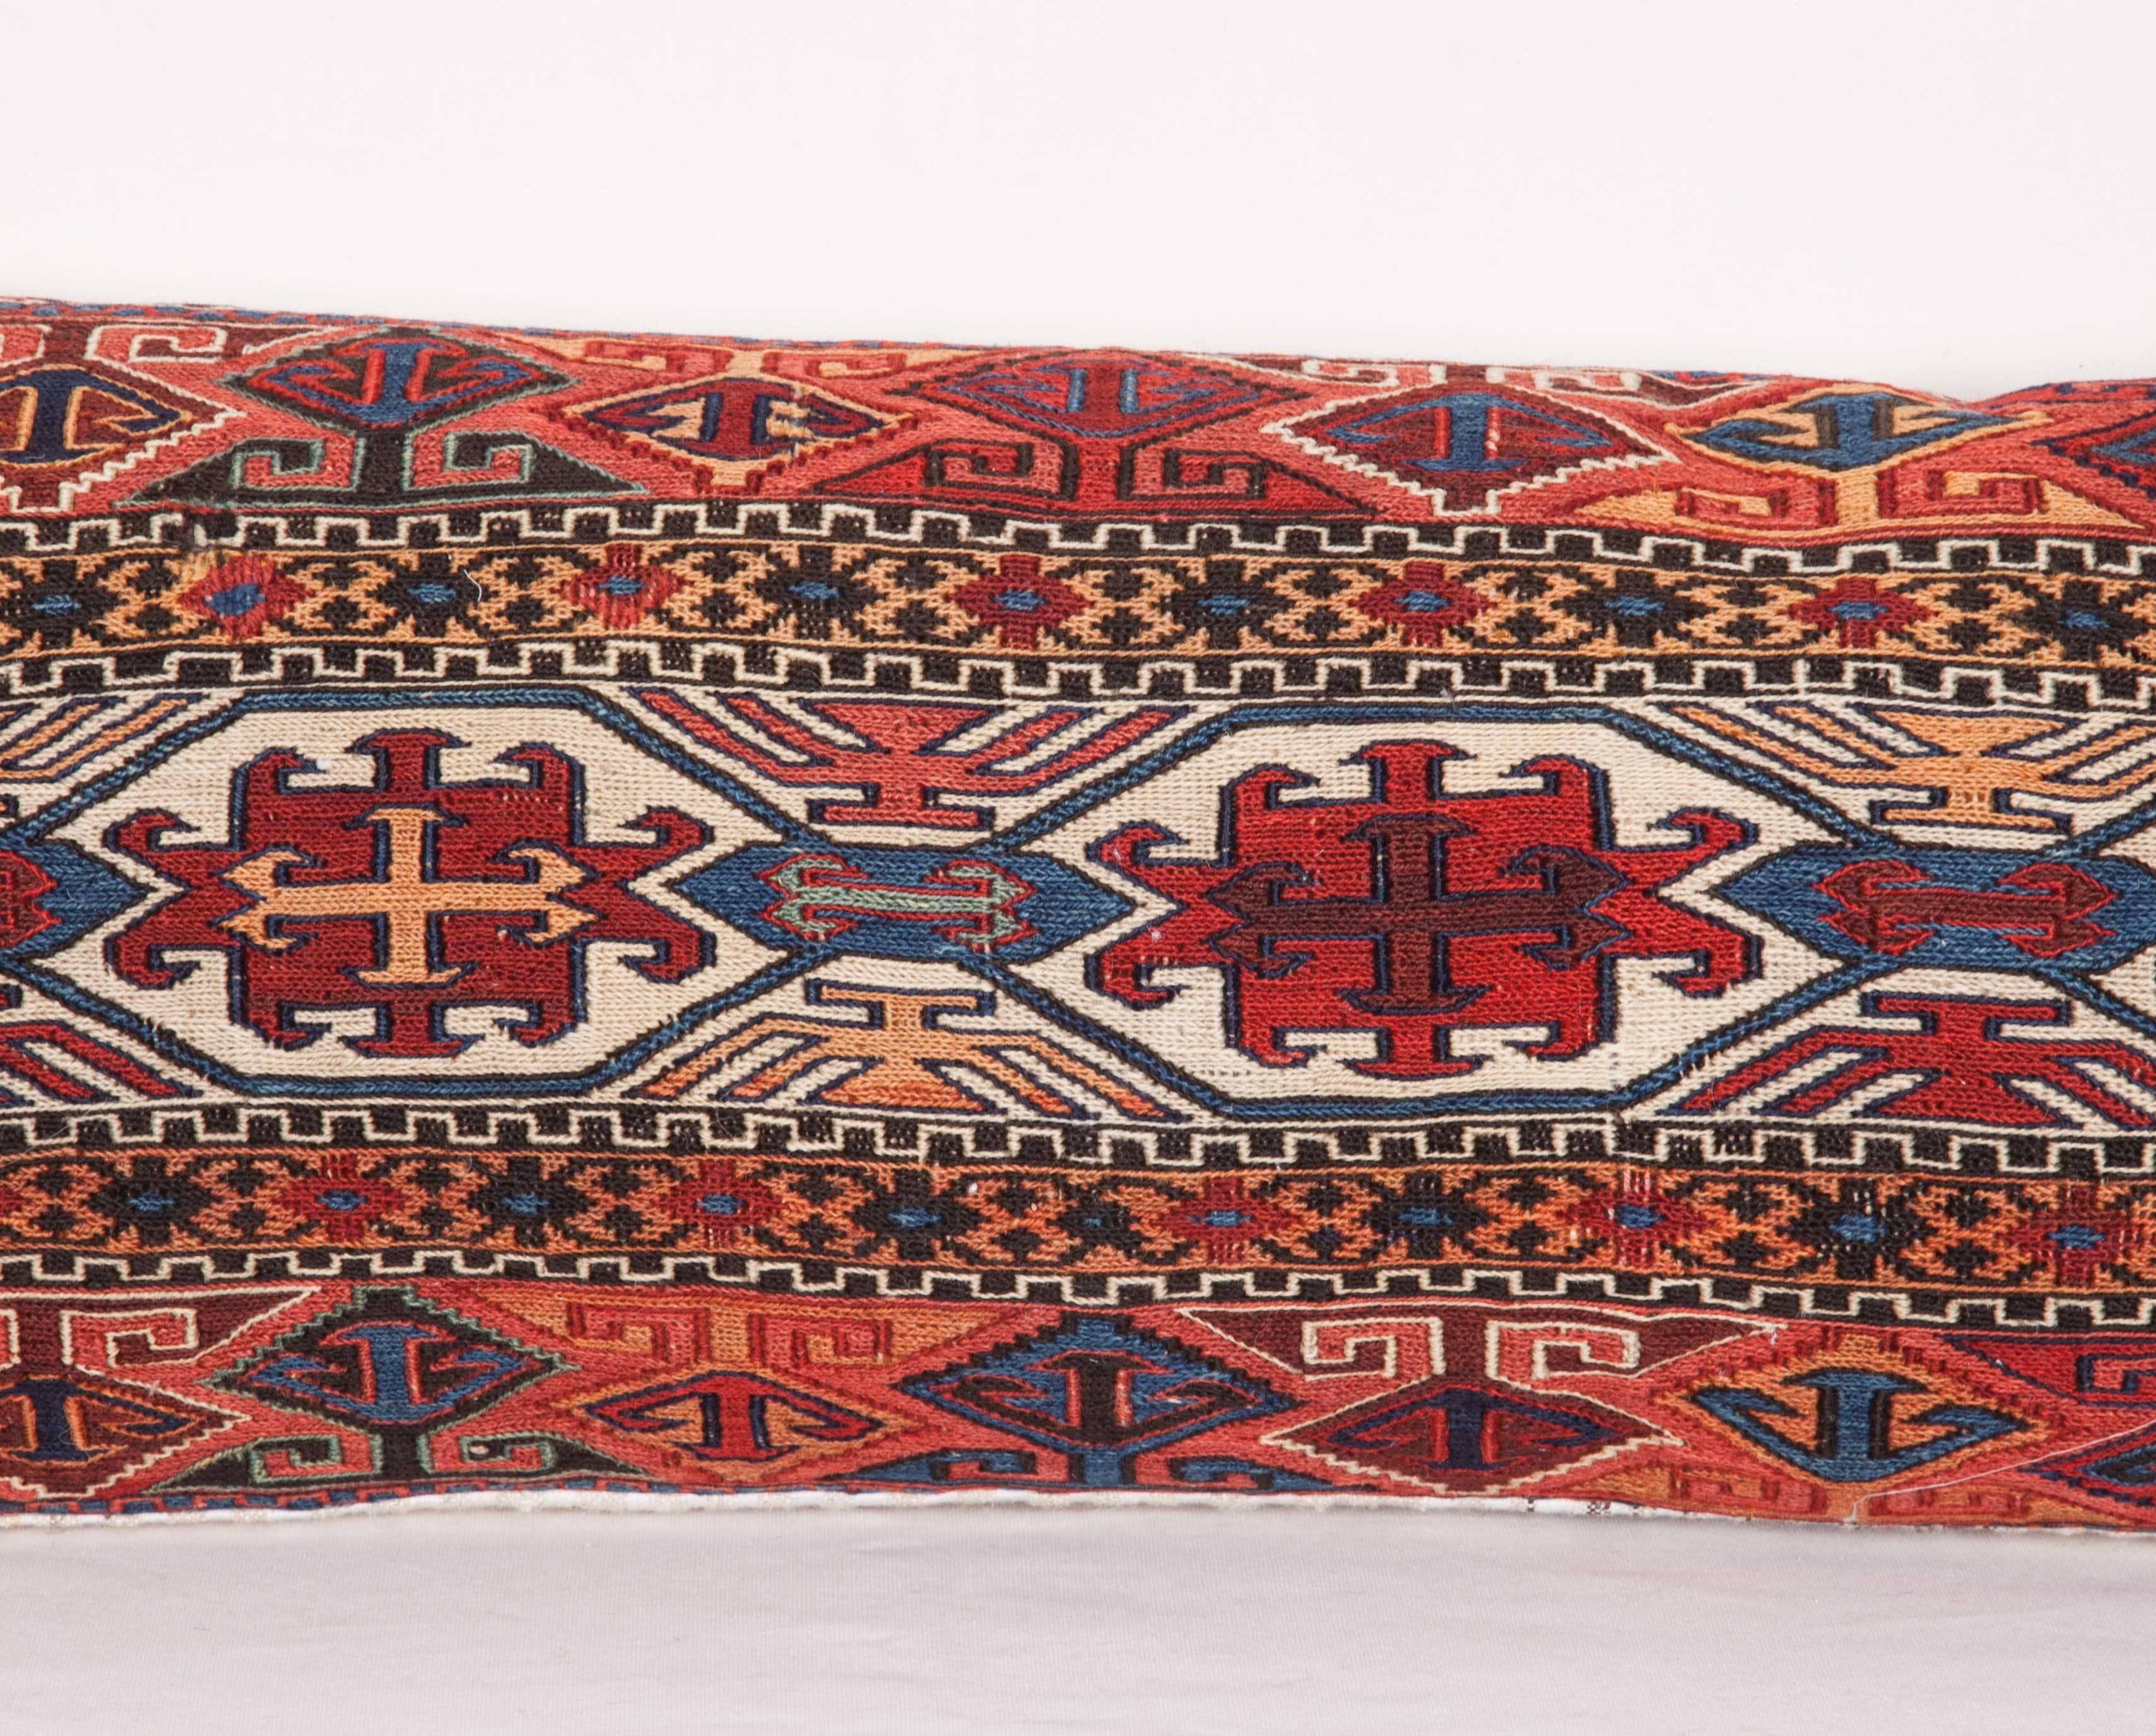 Hand-Woven Antique Sumak Pillows Made Out of Late 19th Century Shasavan Mafrash Panels